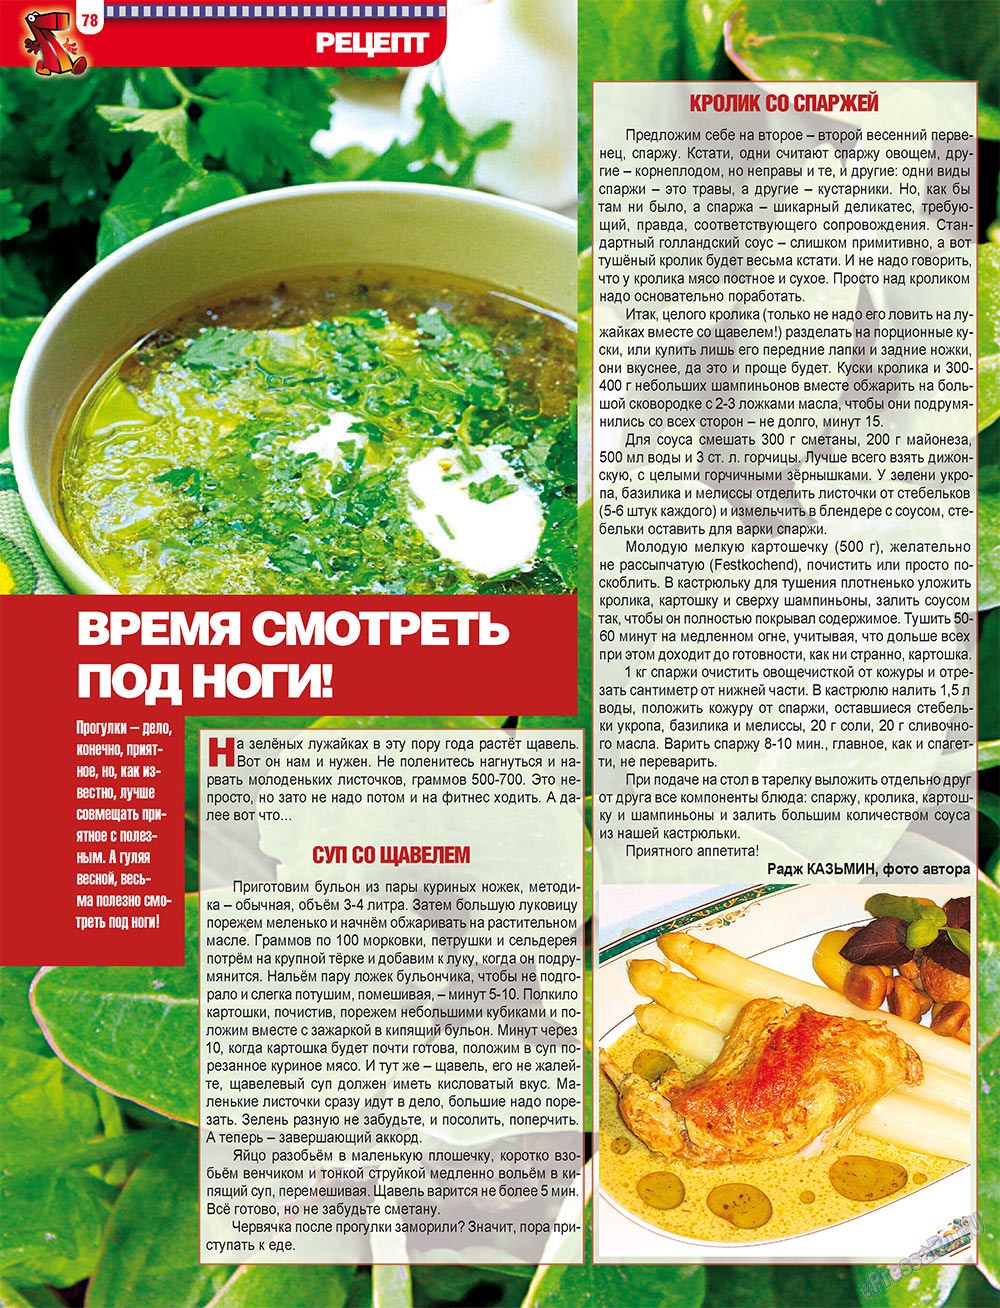 7плюс7я (журнал). 2011 год, номер 21, стр. 78